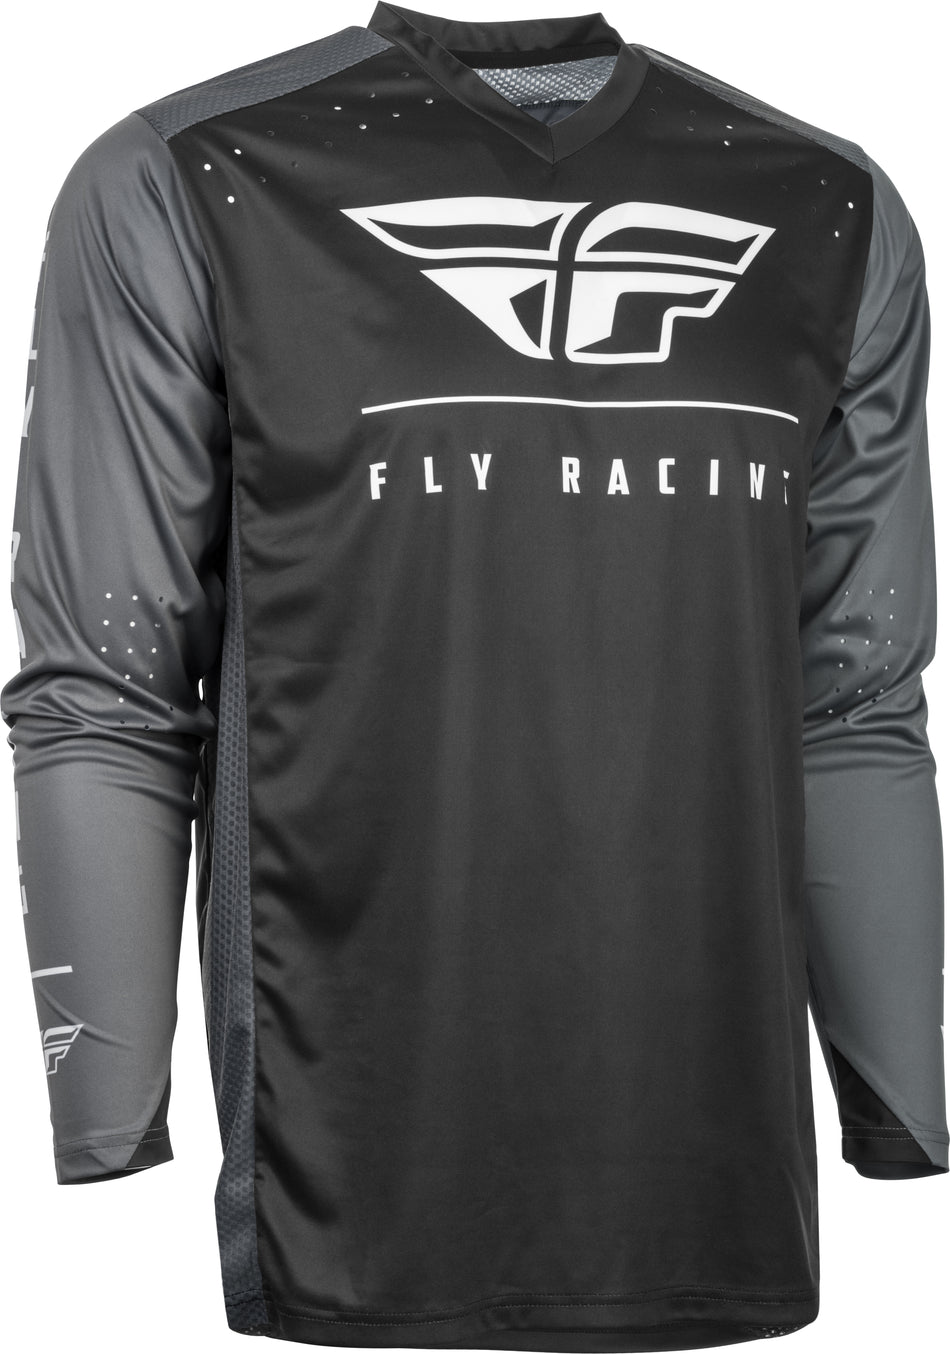 FLY RACING Radium Jersey Black/Grey/White Md 352-8070M